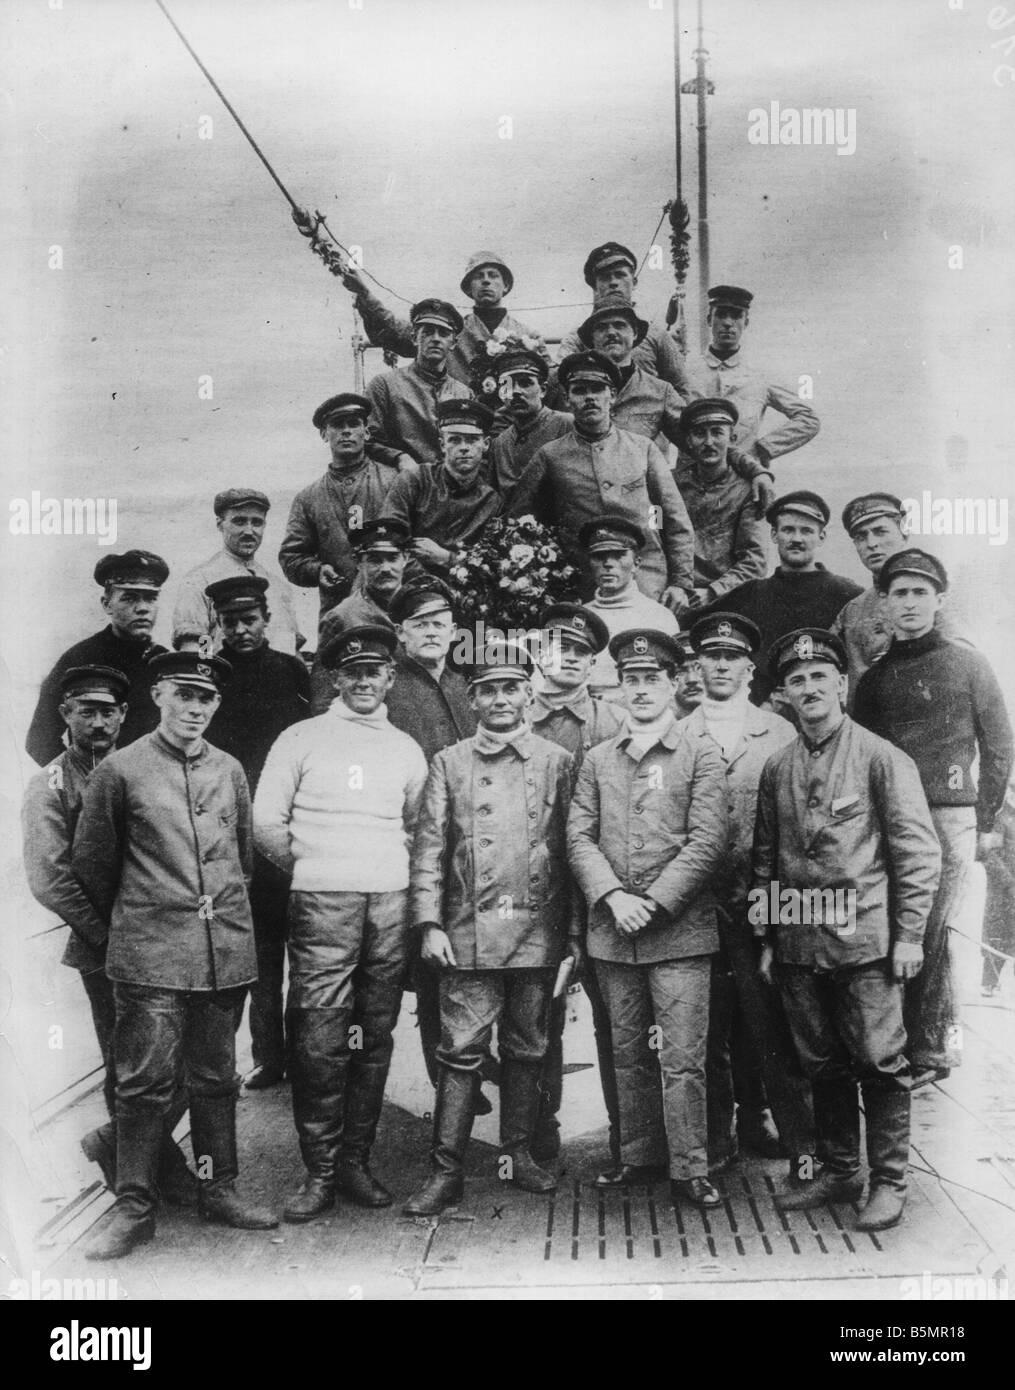 9 1916 7 8 A1 1 Merchant U boat Deutschland Crew World War 1 Underflow of the Allied sea blockade with the merchant U boat Deuts Stock Photo